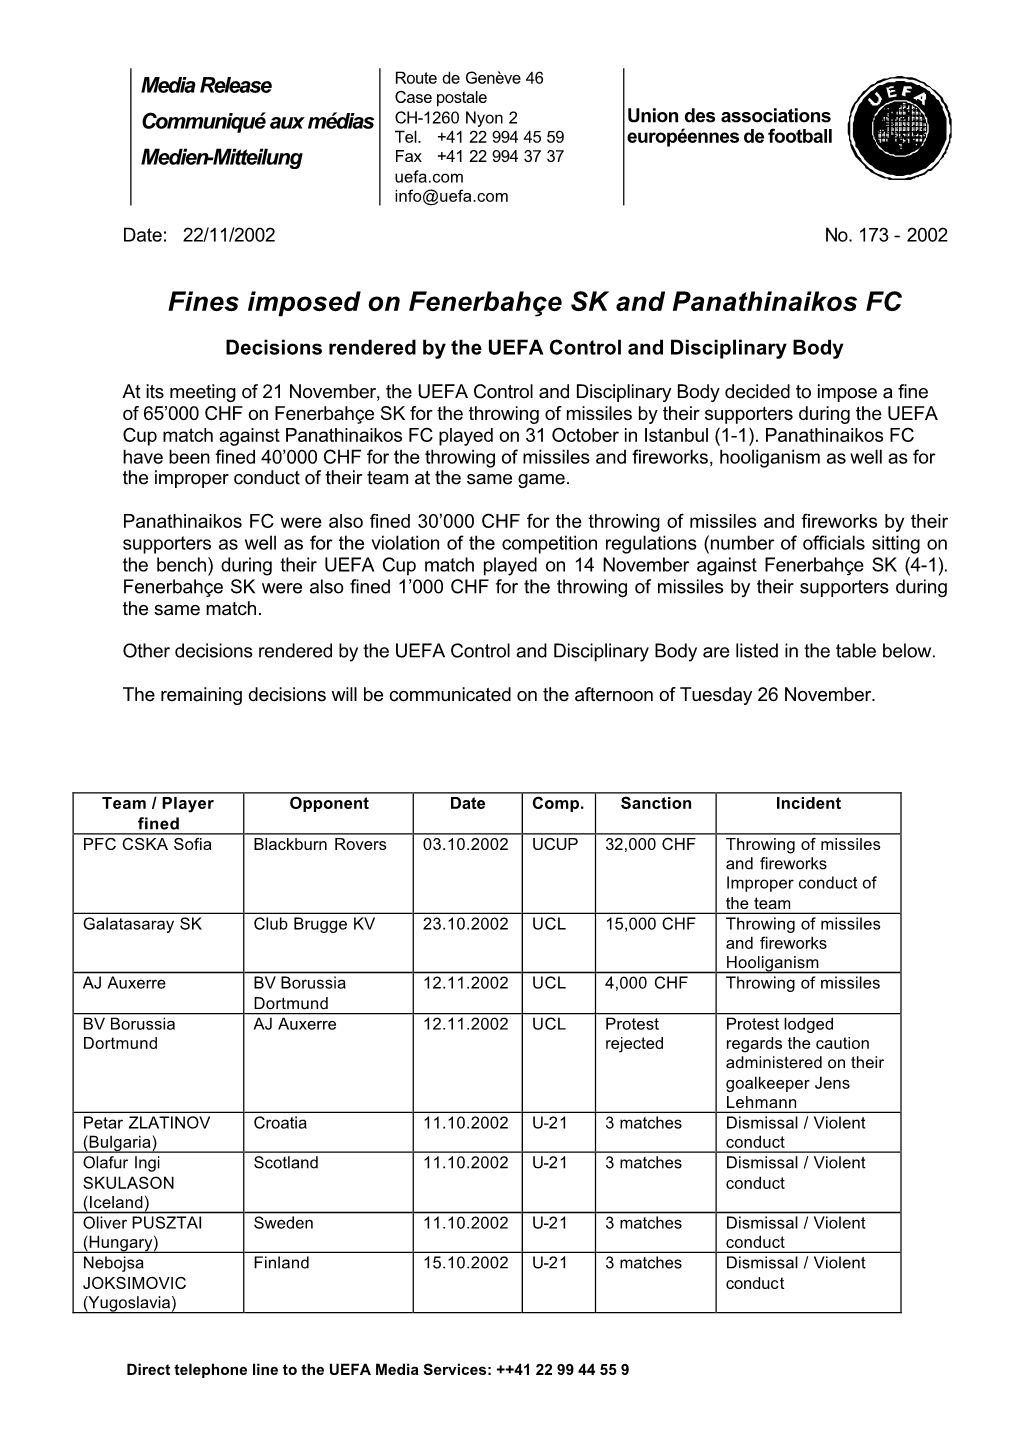 Fines Imposed on Fenerbahçe SK and Panathinaikos FC